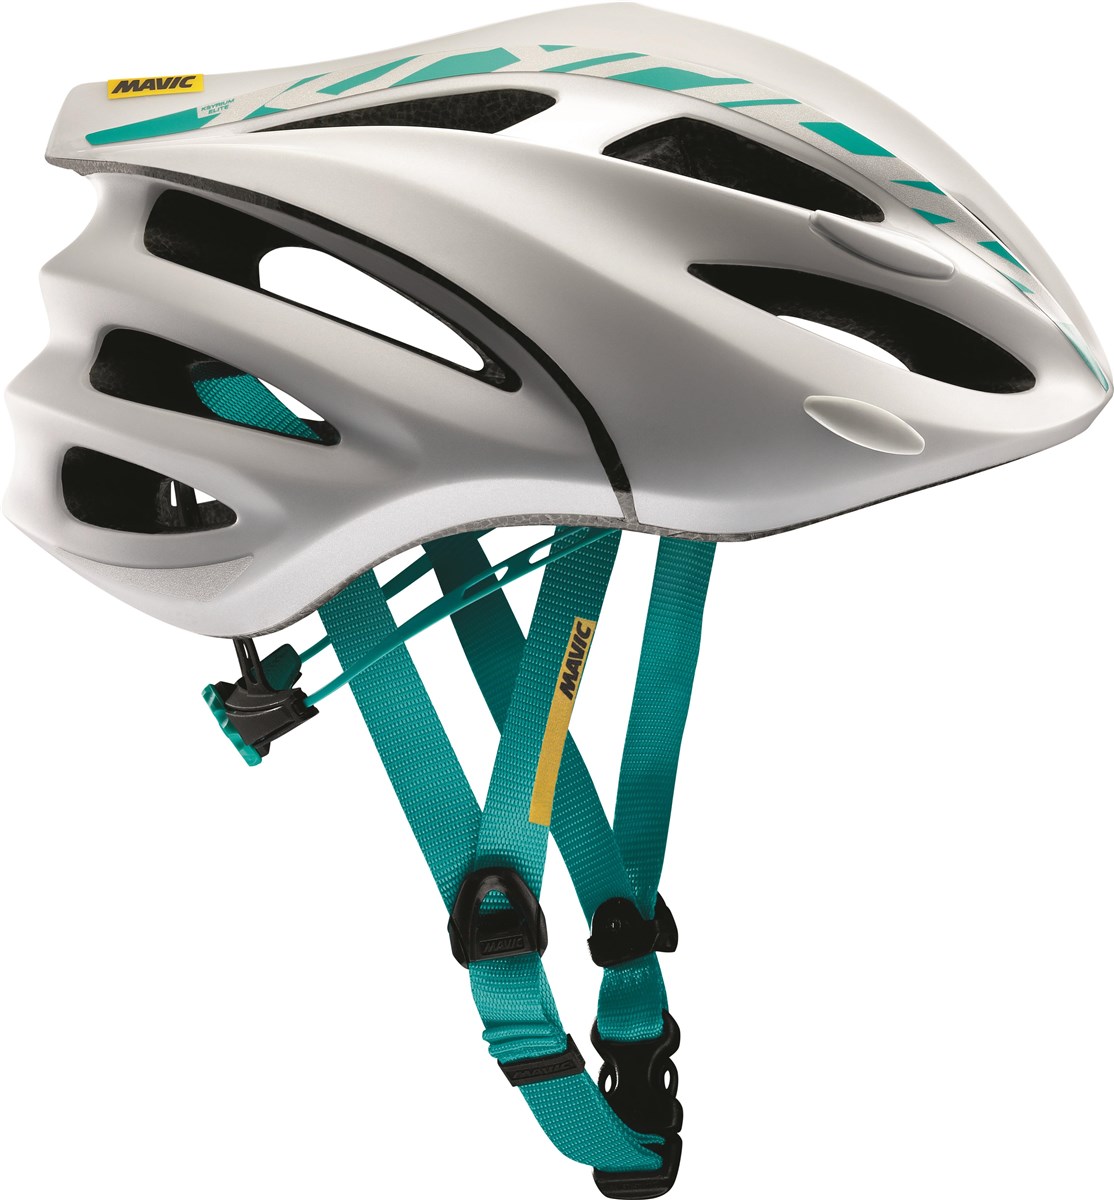 Mavic Ksyrium Elite Road Cycling Helmet 2016 product image